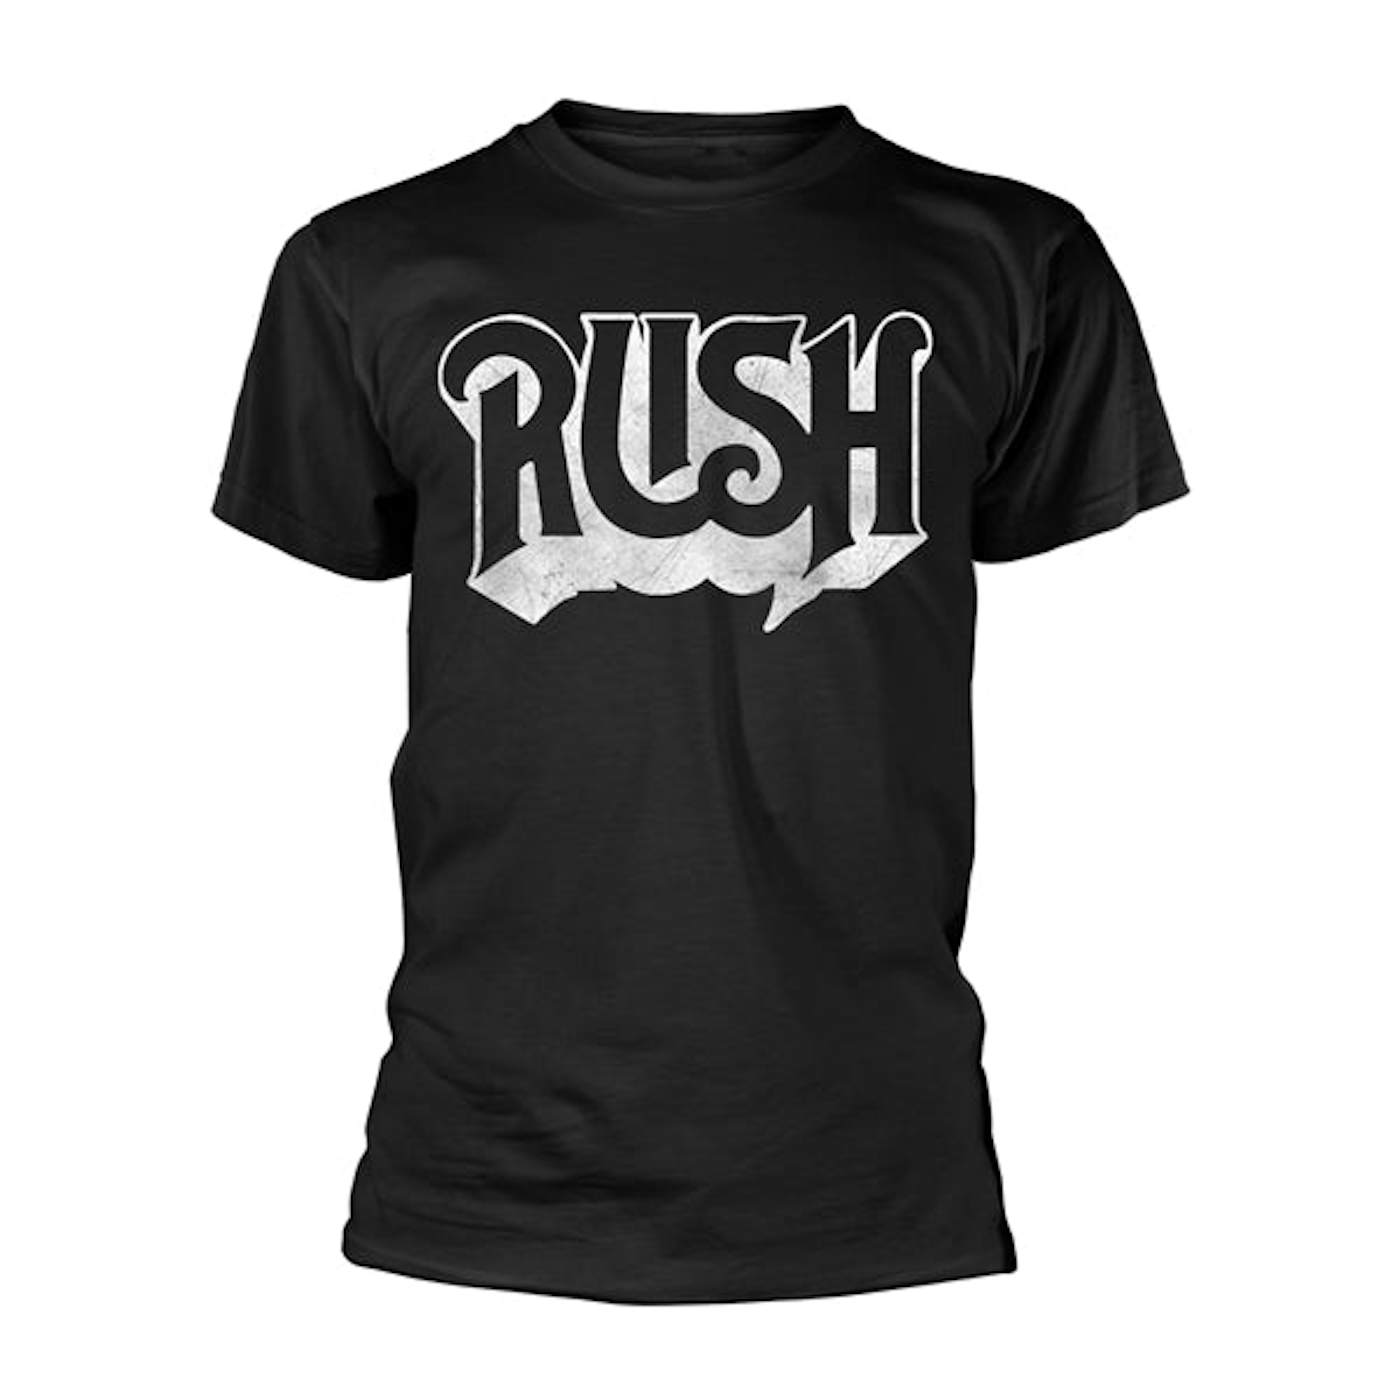 Rush T Shirt - Distressed